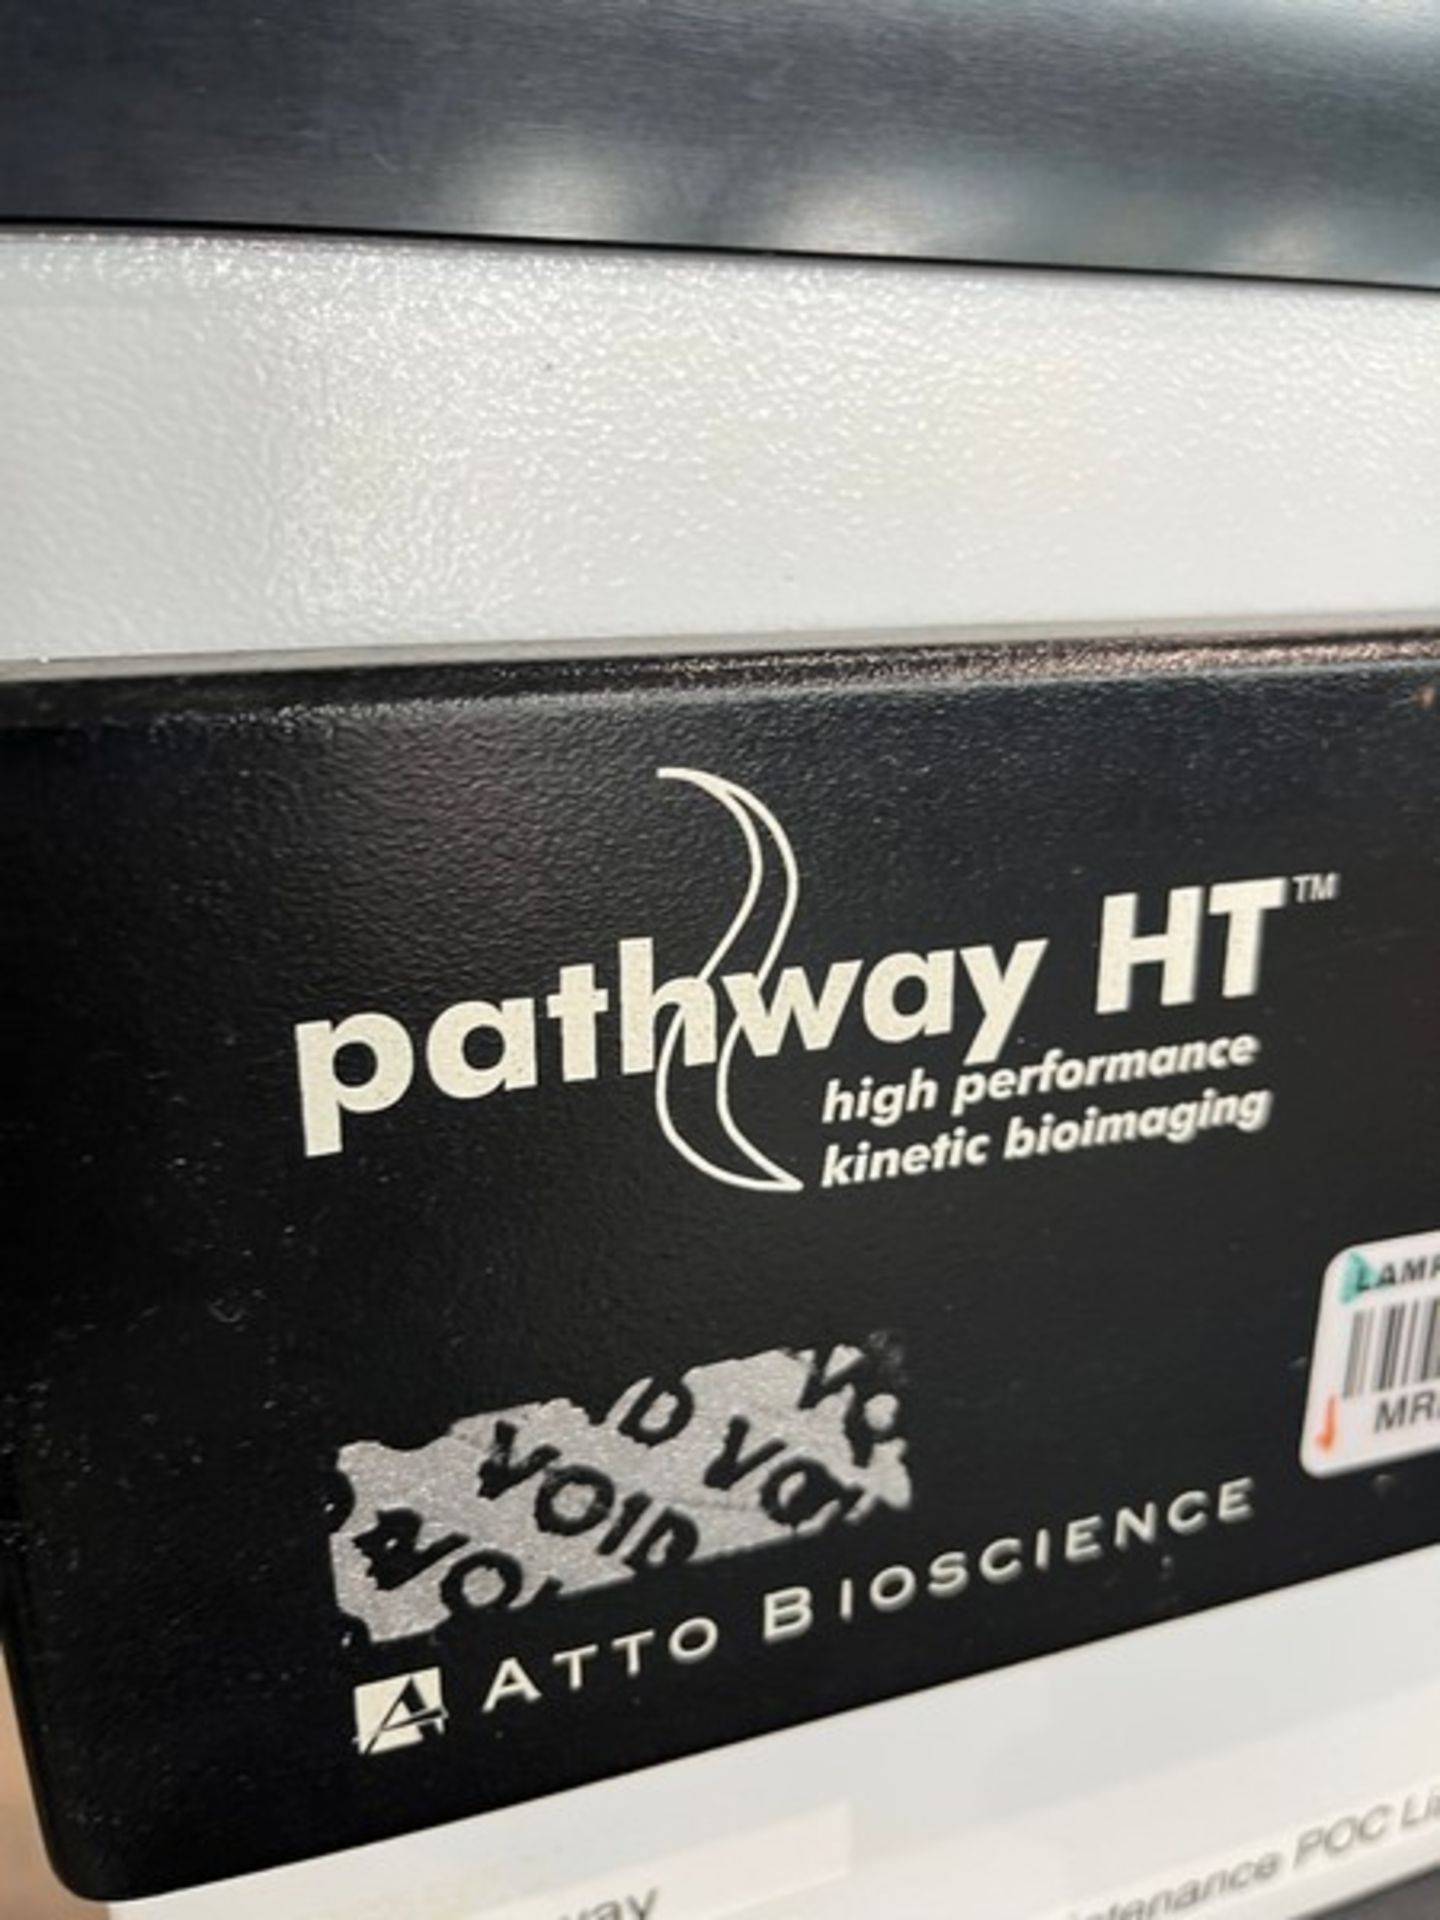 Pathway HT High Performance Kinetic Bioimaging Pathway HT high performance kinetic Bioimaging ATTO - Image 6 of 12